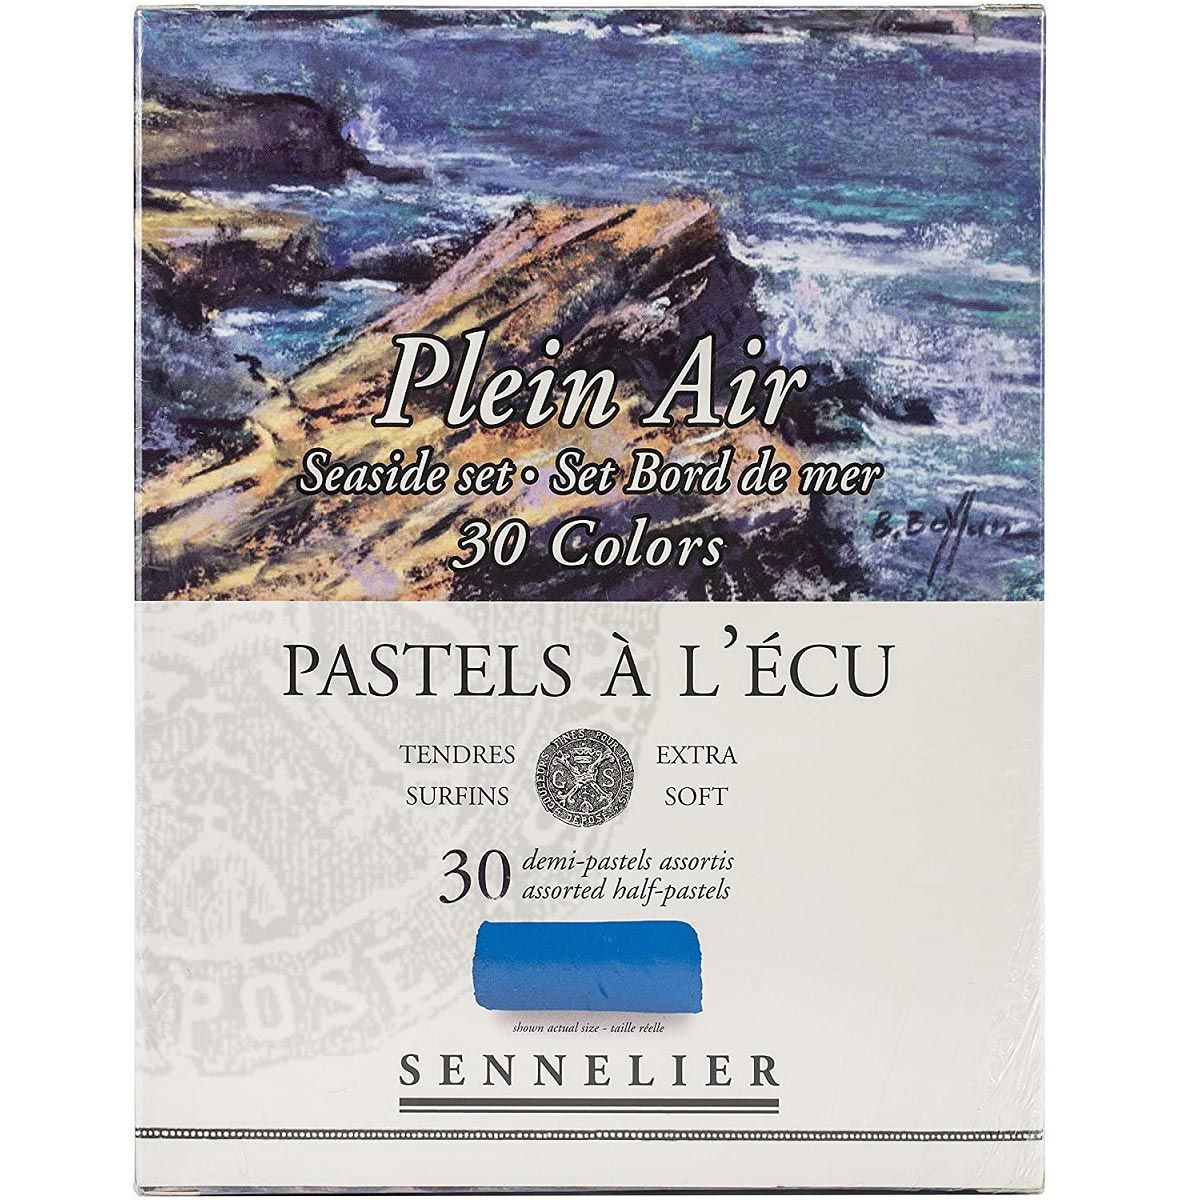 Sennelier Extra Soft Pastel Half-Sticks Seaside Sets of 30